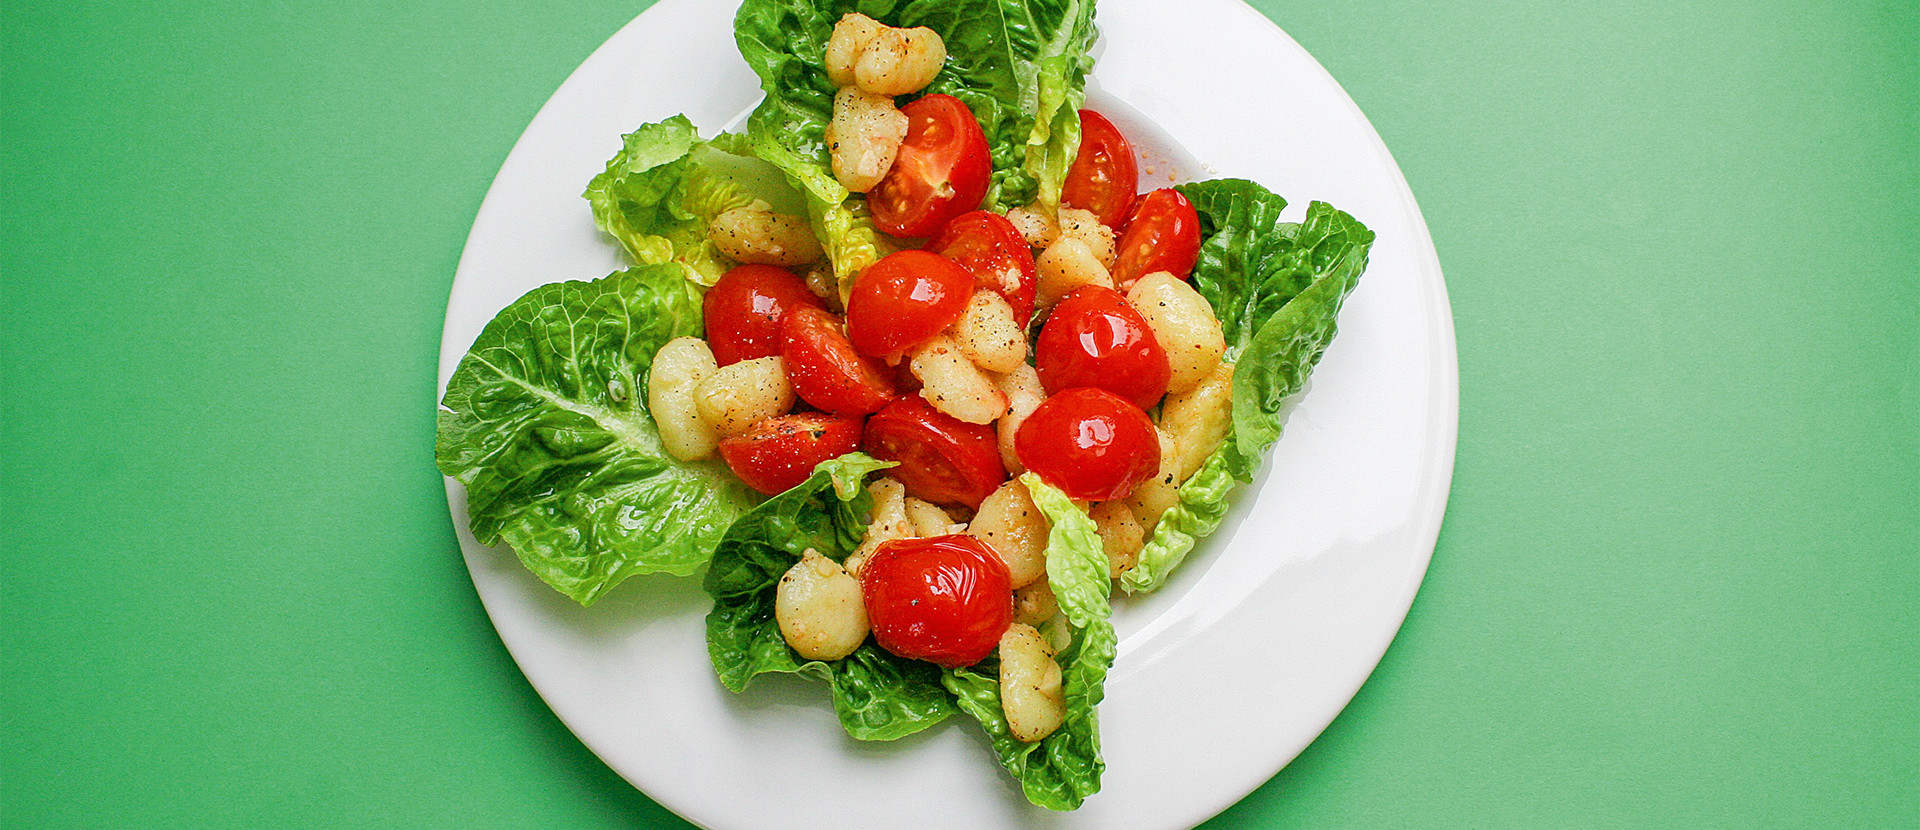 Lauwarmer Gnocchi Salat mit Tomaten